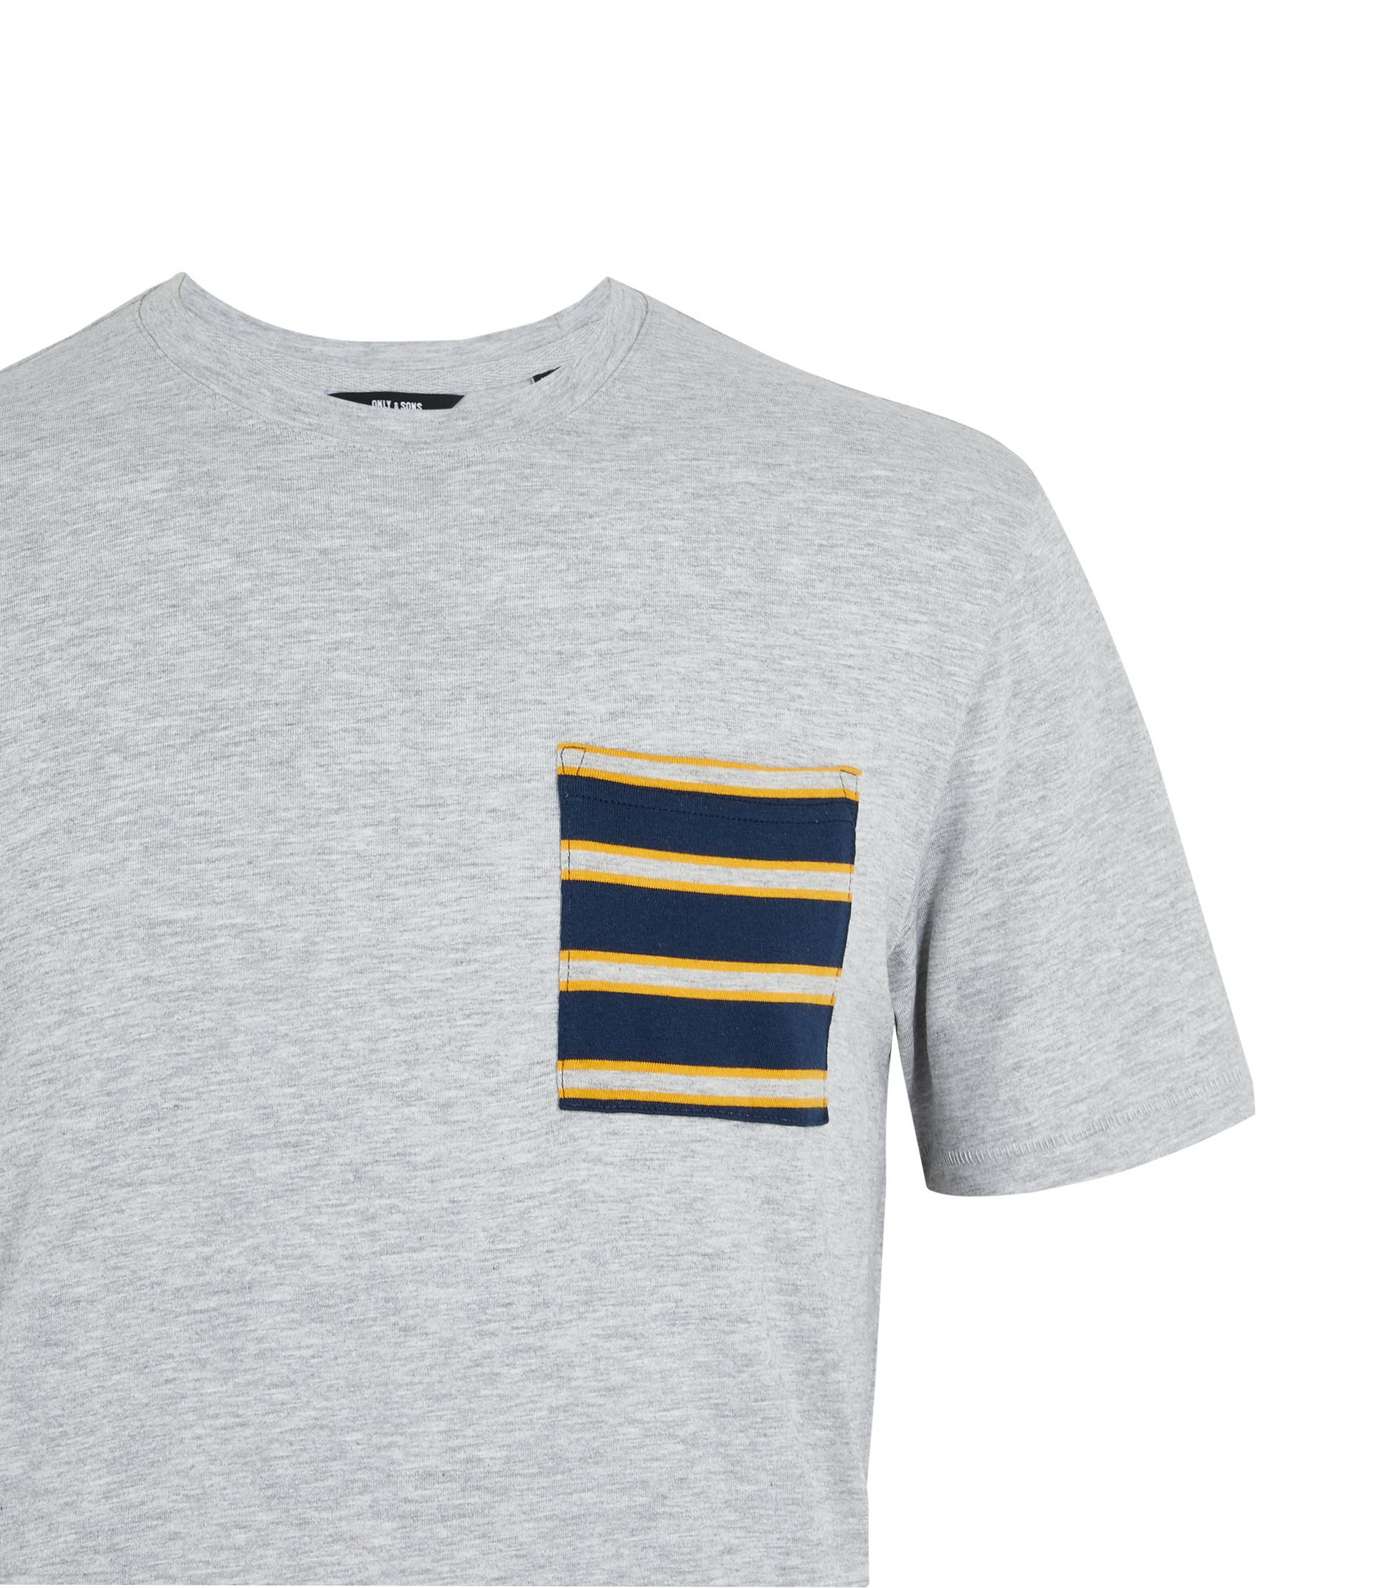 Only & Sons Grey Marl Stripe Pocket T-Shirt Image 2